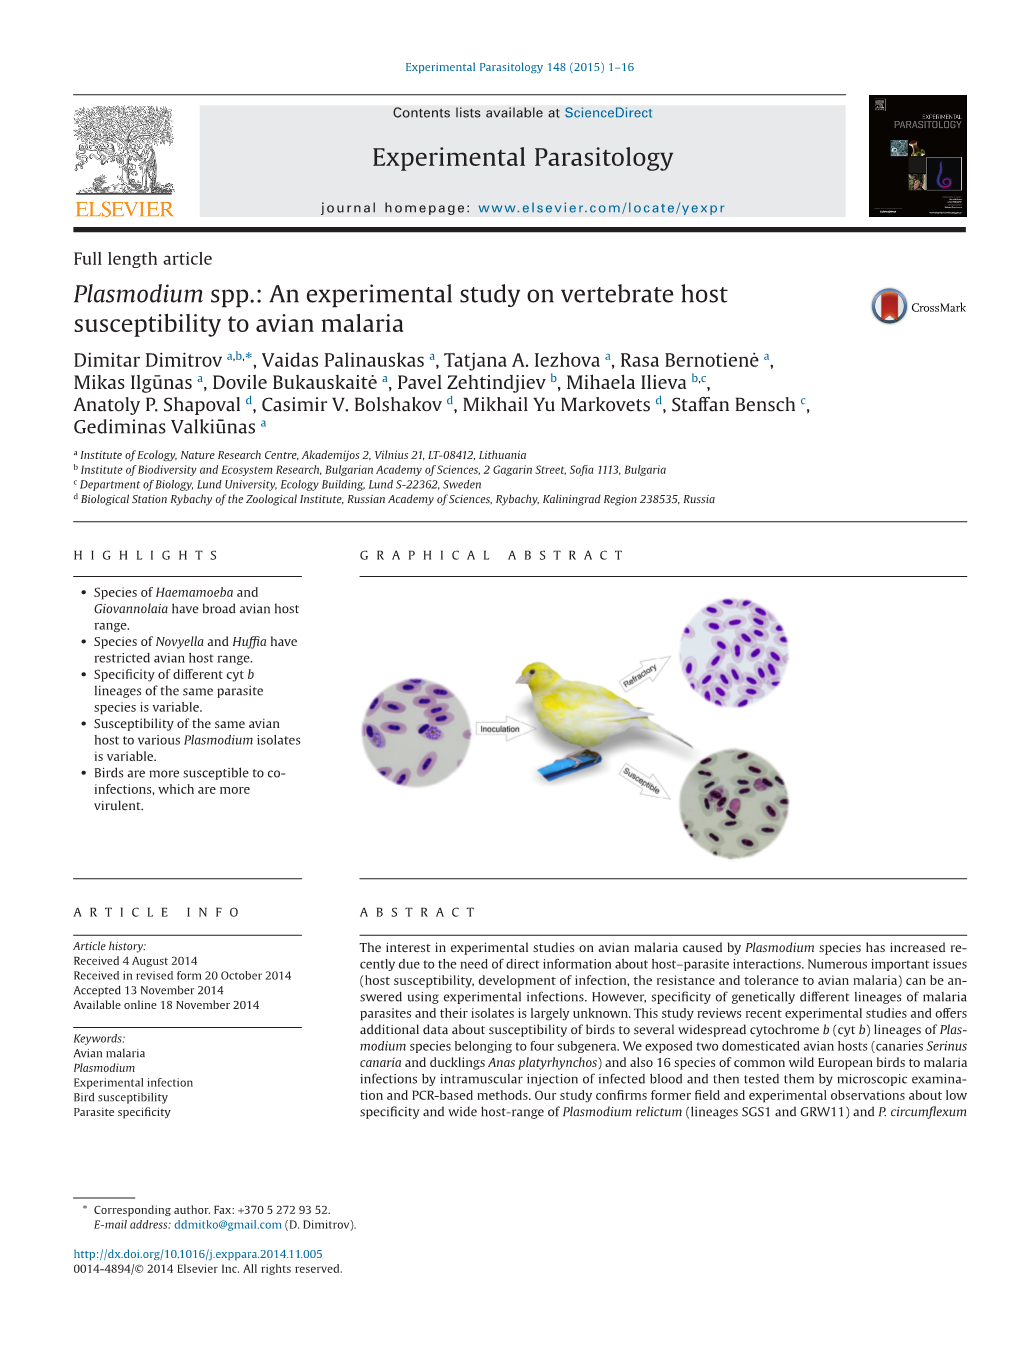 An Experimental Study on Vertebrate Host Susceptibility to Avian Malaria Dimitar Dimitrov A,B,*, Vaidas Palinauskas A, Tatjana A